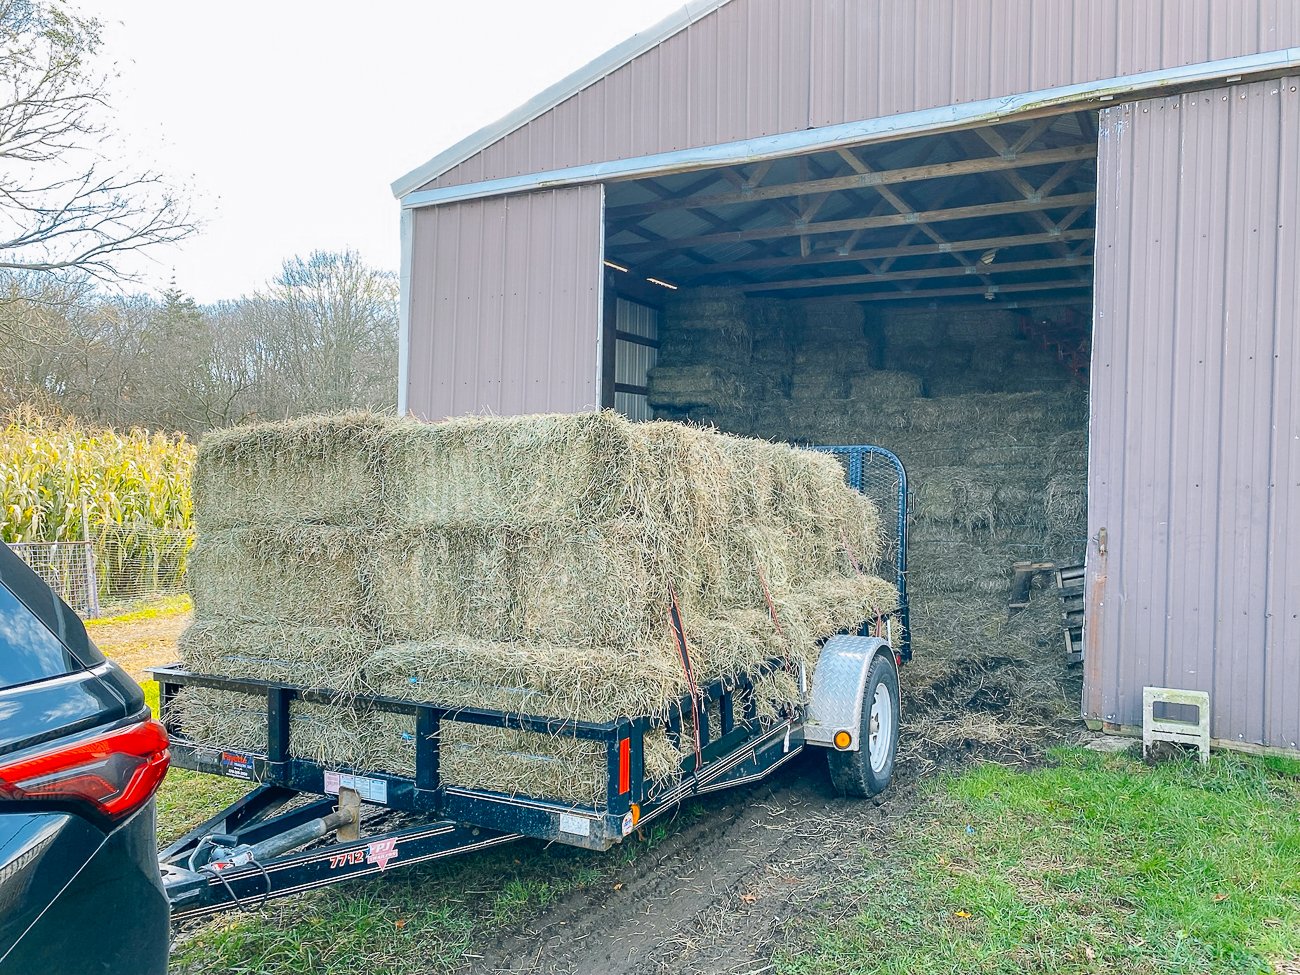 Trailer load of hay